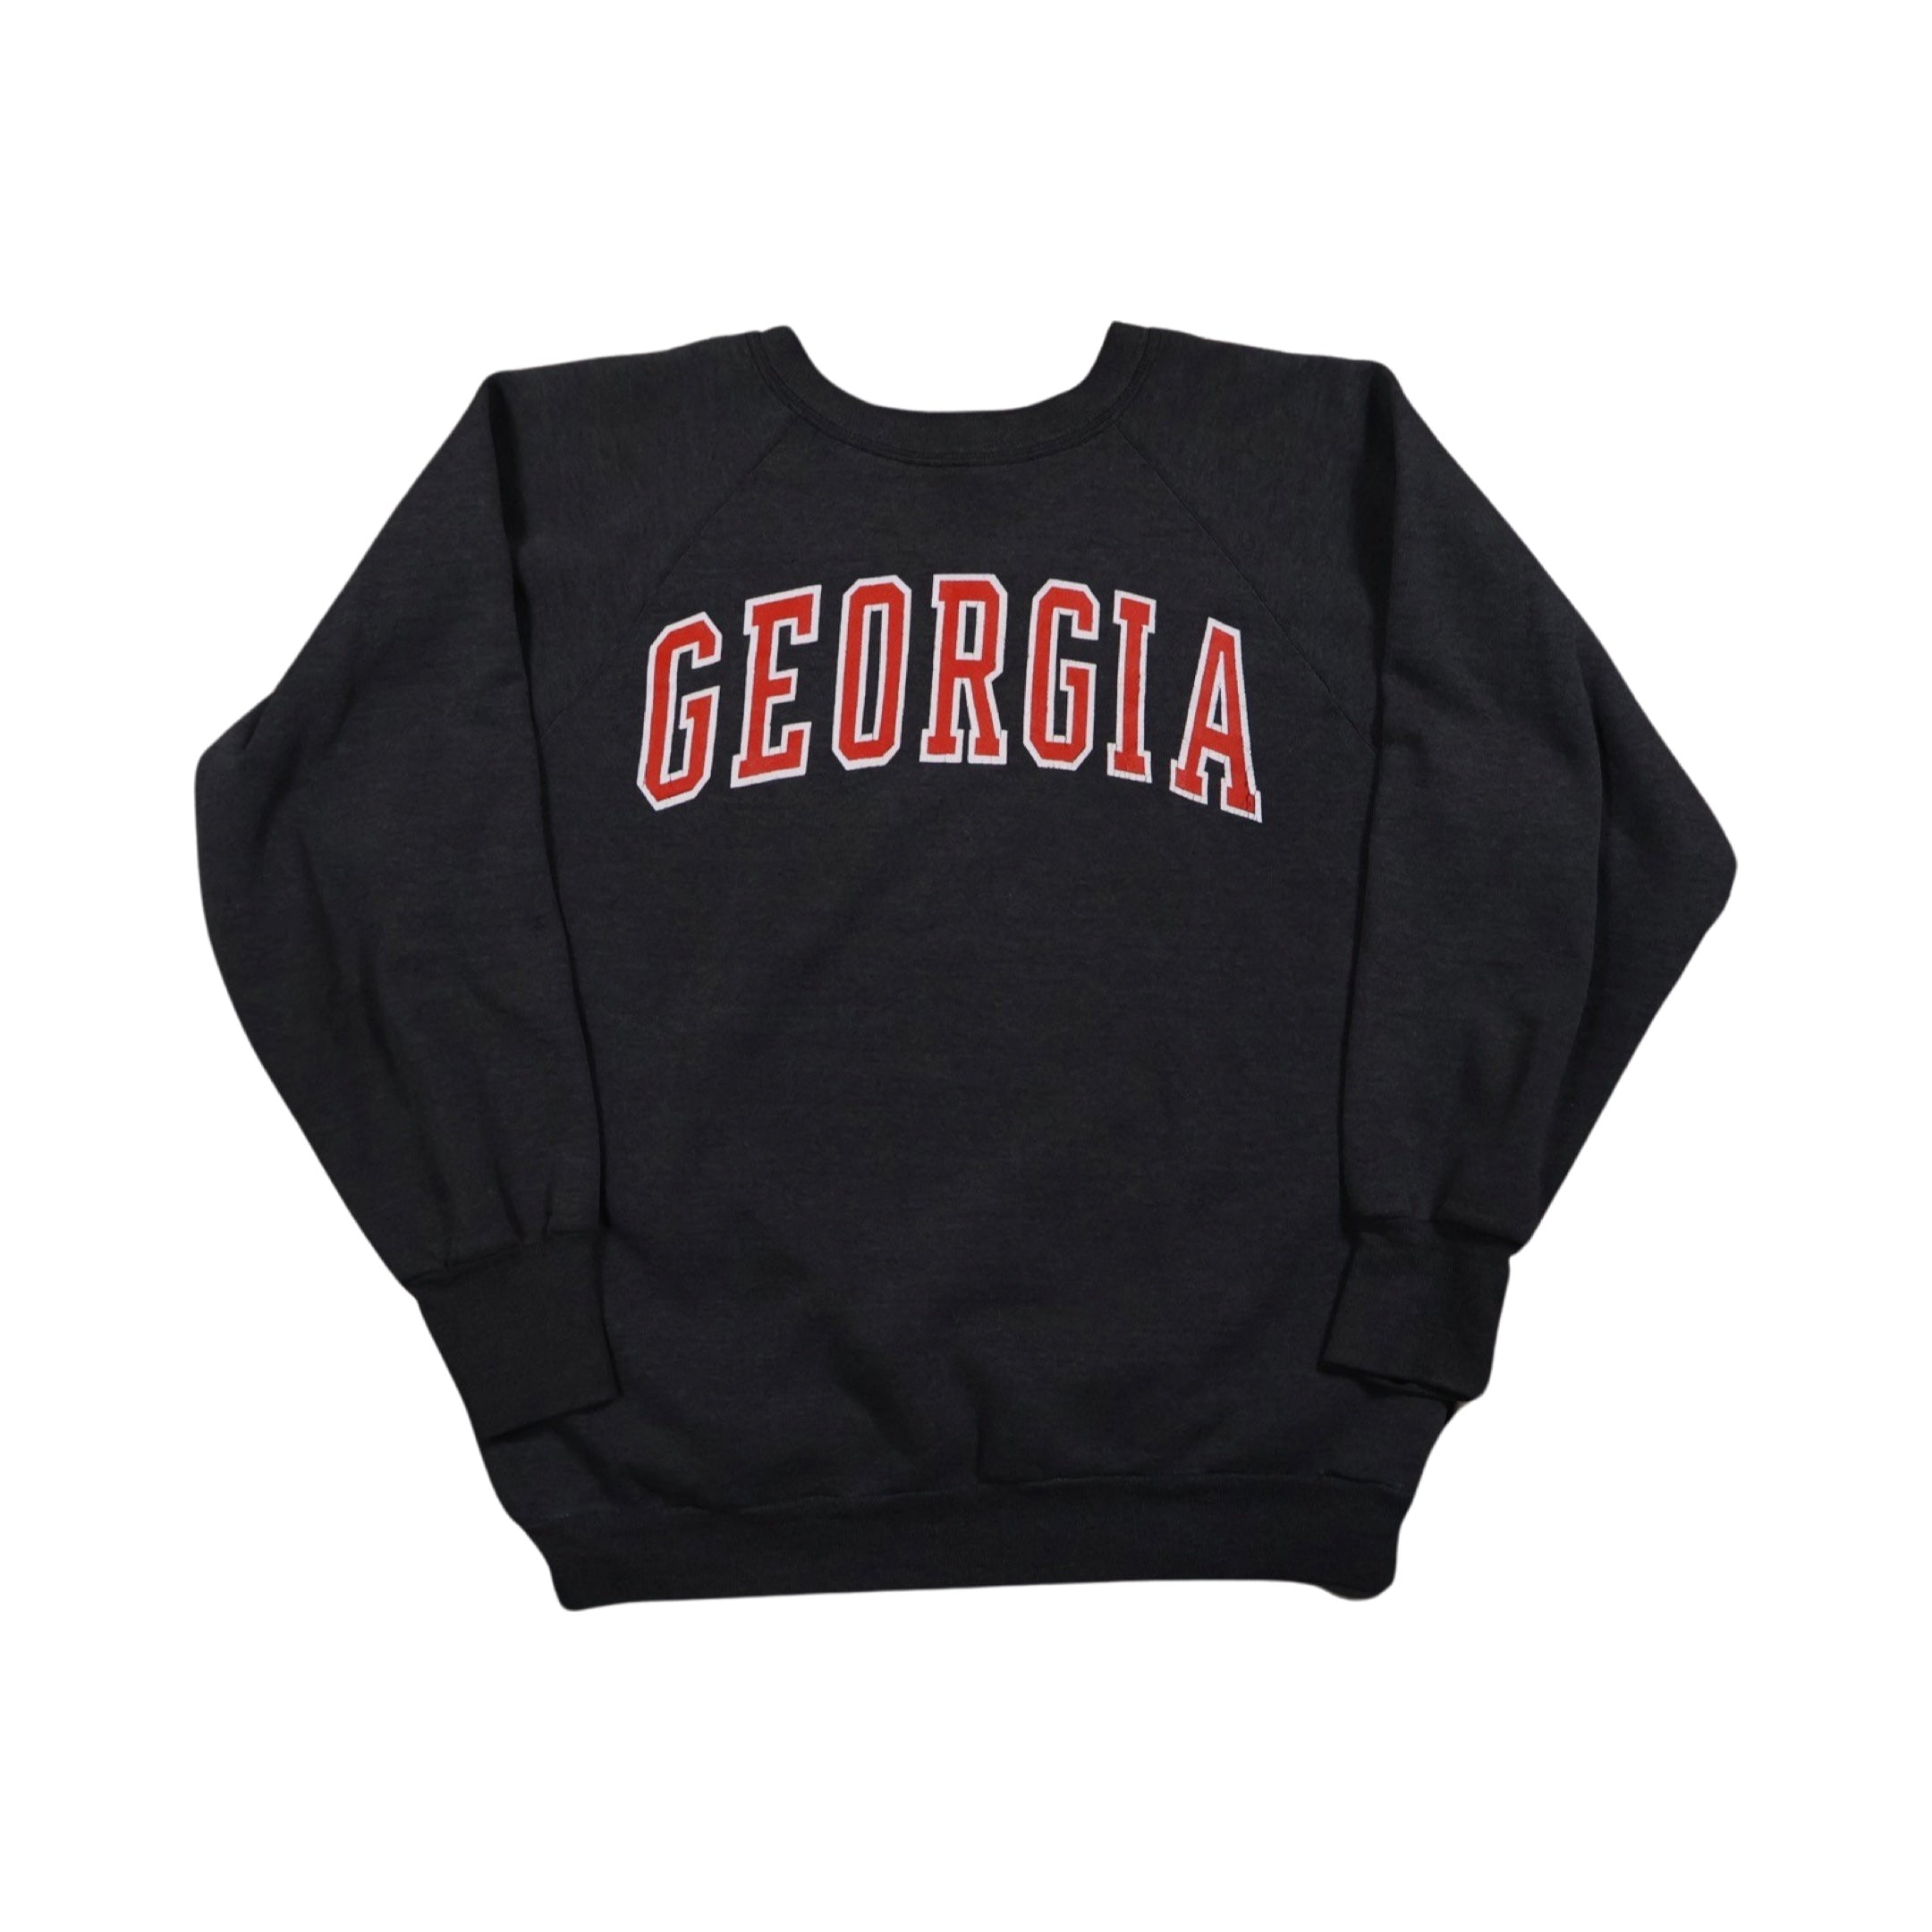 Georgia 80s Spellout Sweater (Small)